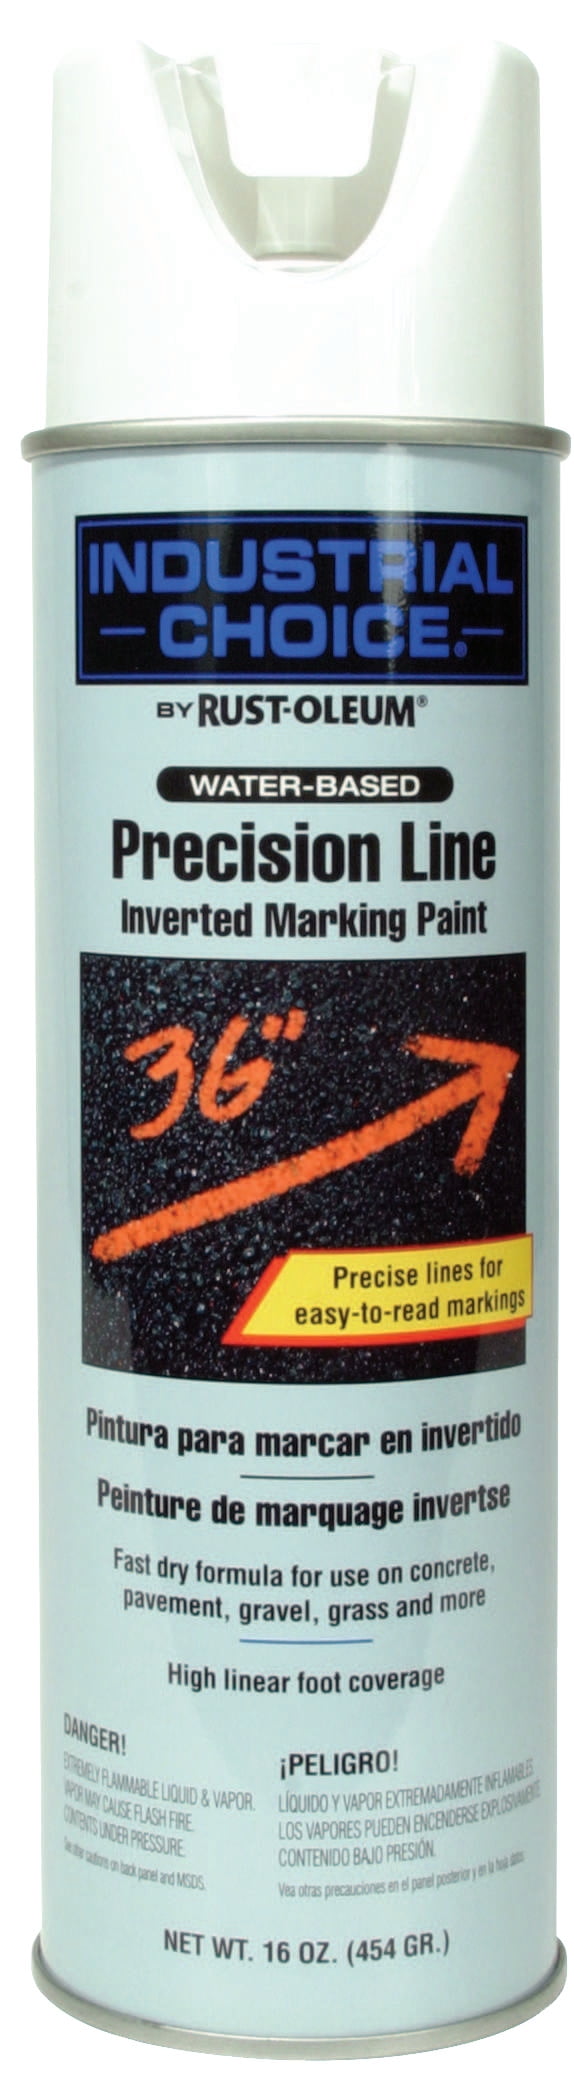 Rust-Oleum Industrial Choice Precision Line Marking Paint - Zerbee